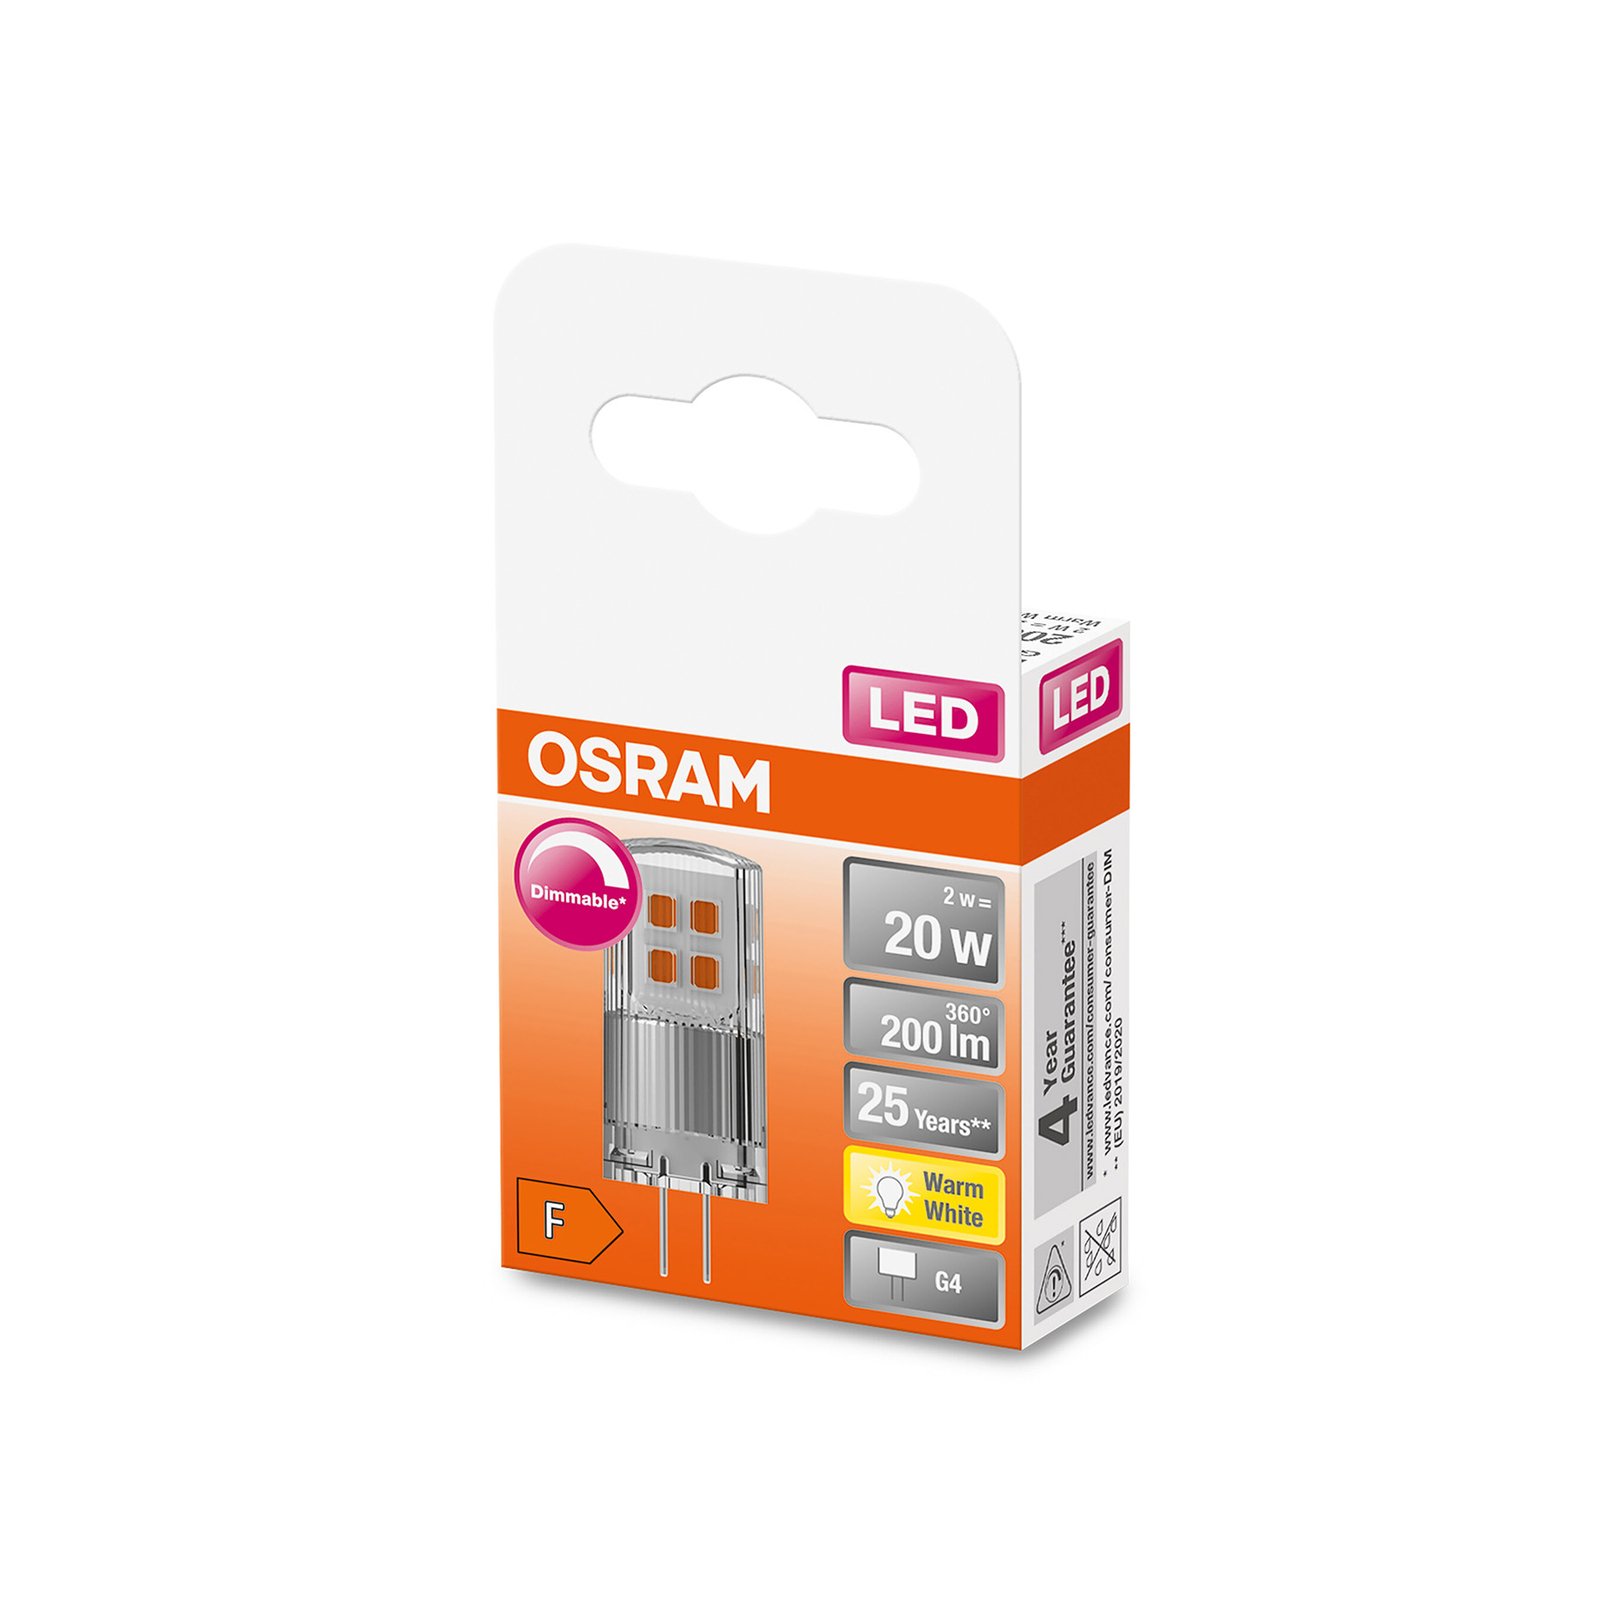 OSRAM PIN 12V LED-Stiftsockel G4 2W 200lm dimmbar